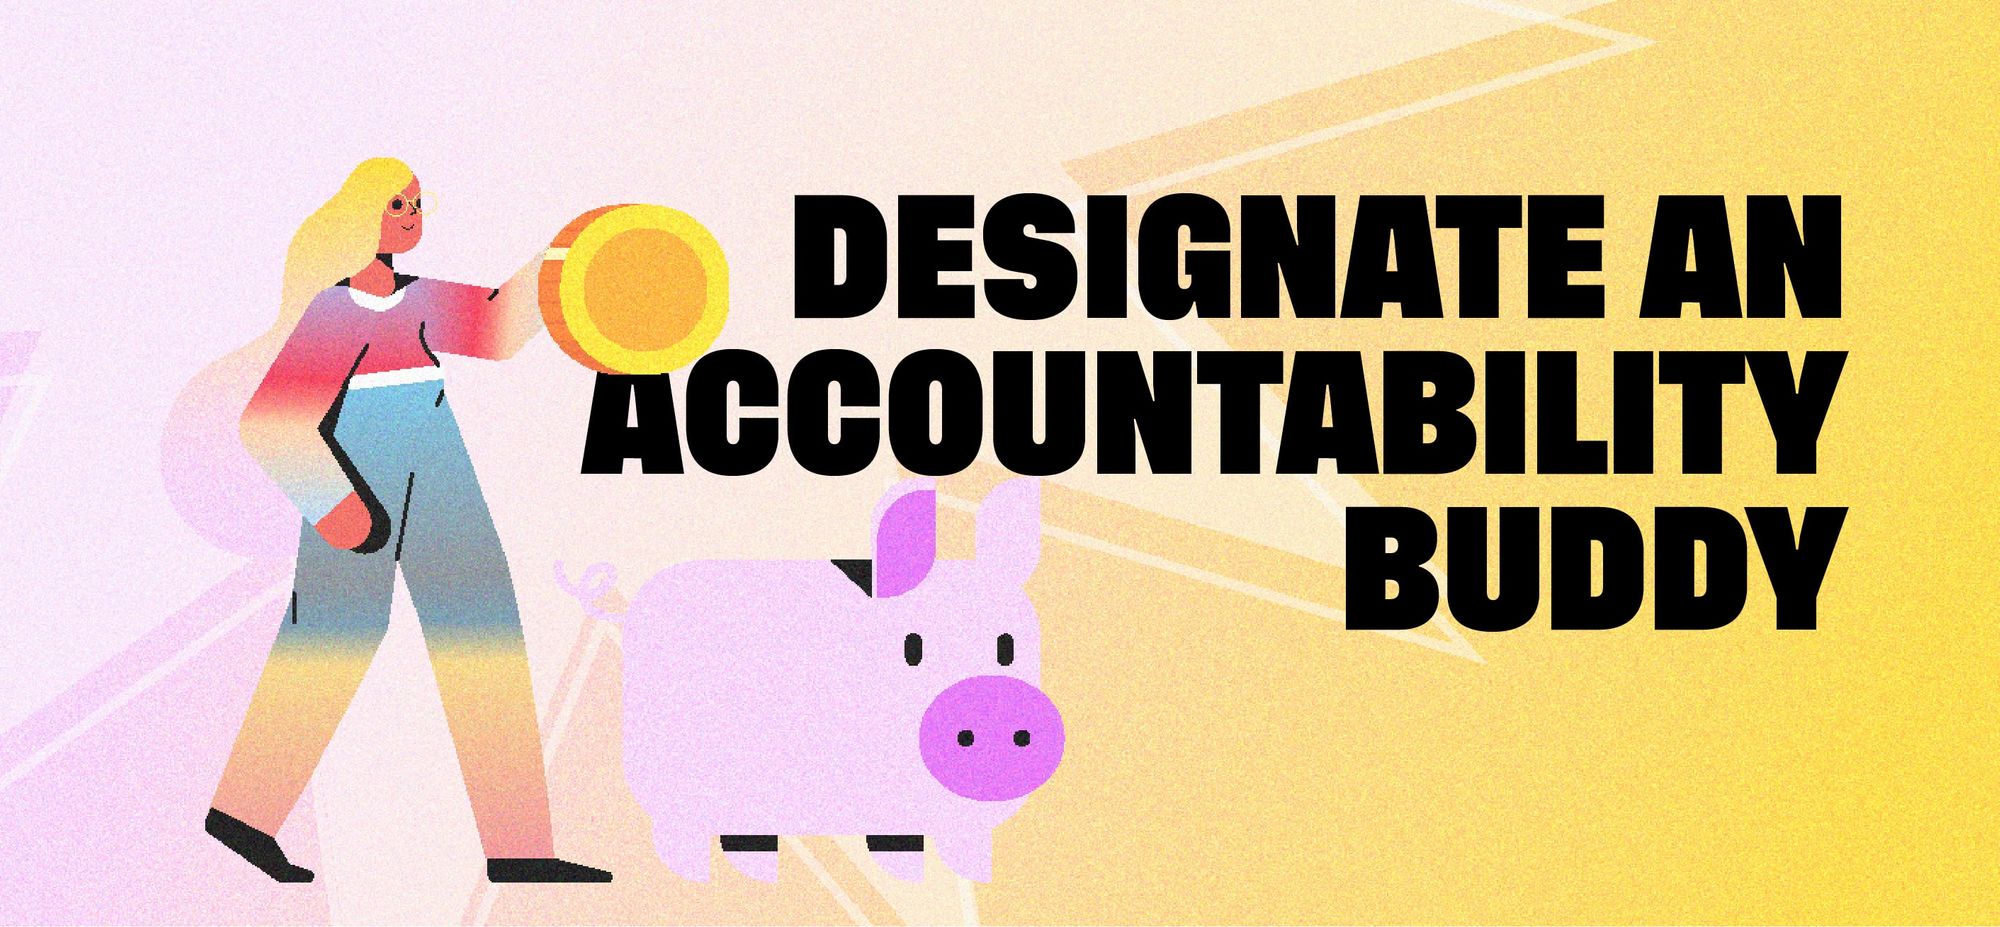 Designate an accountability buddy